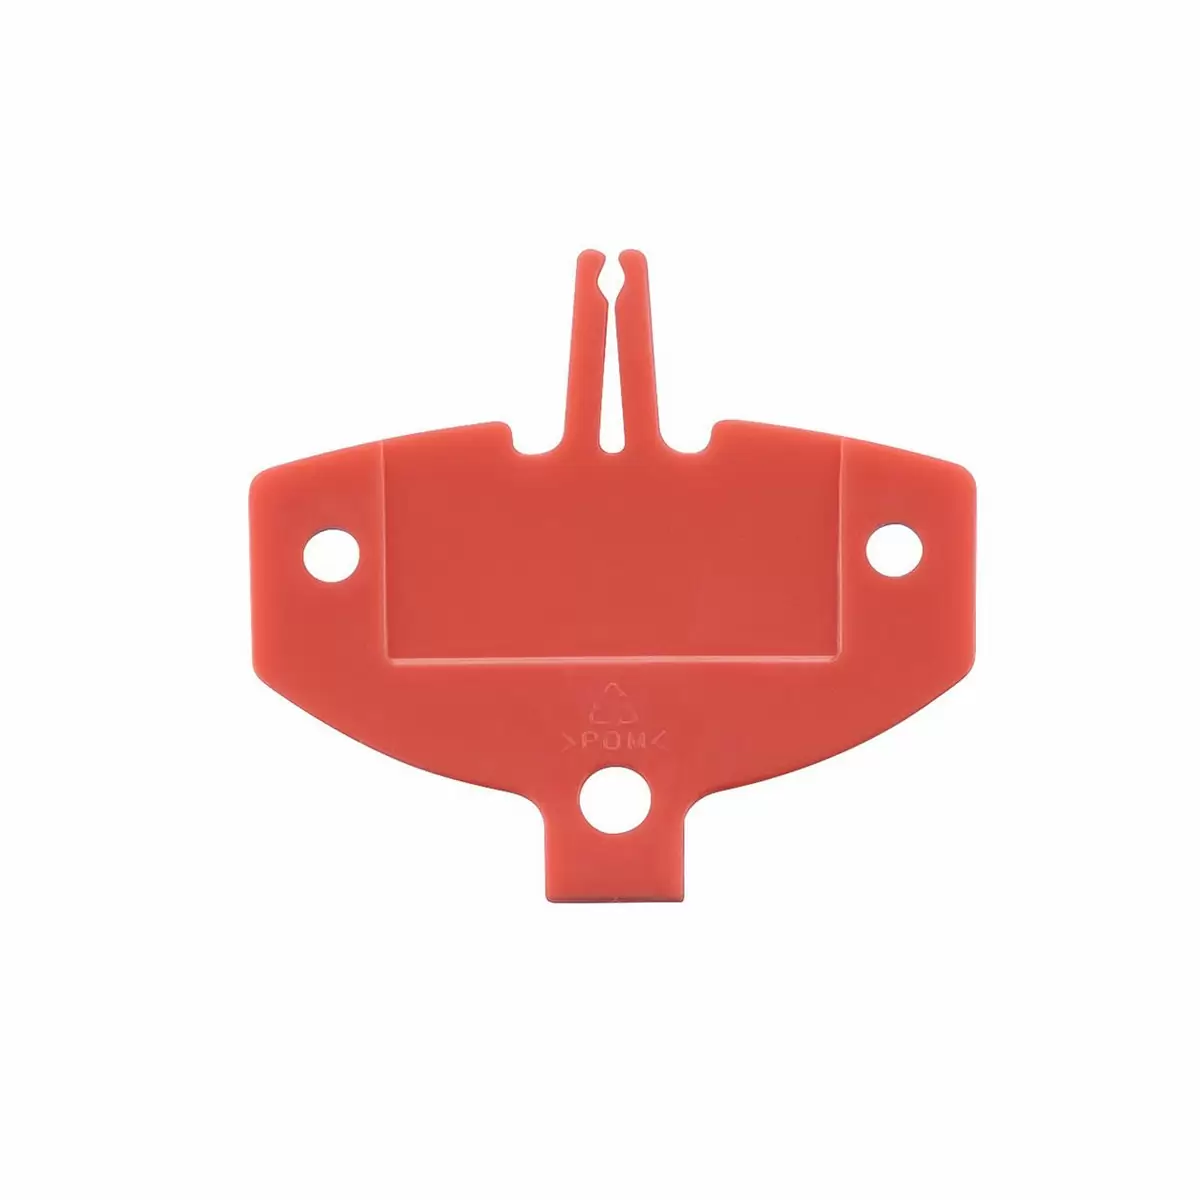 Pad spacer brake pads for XTR / XT / SLX - image